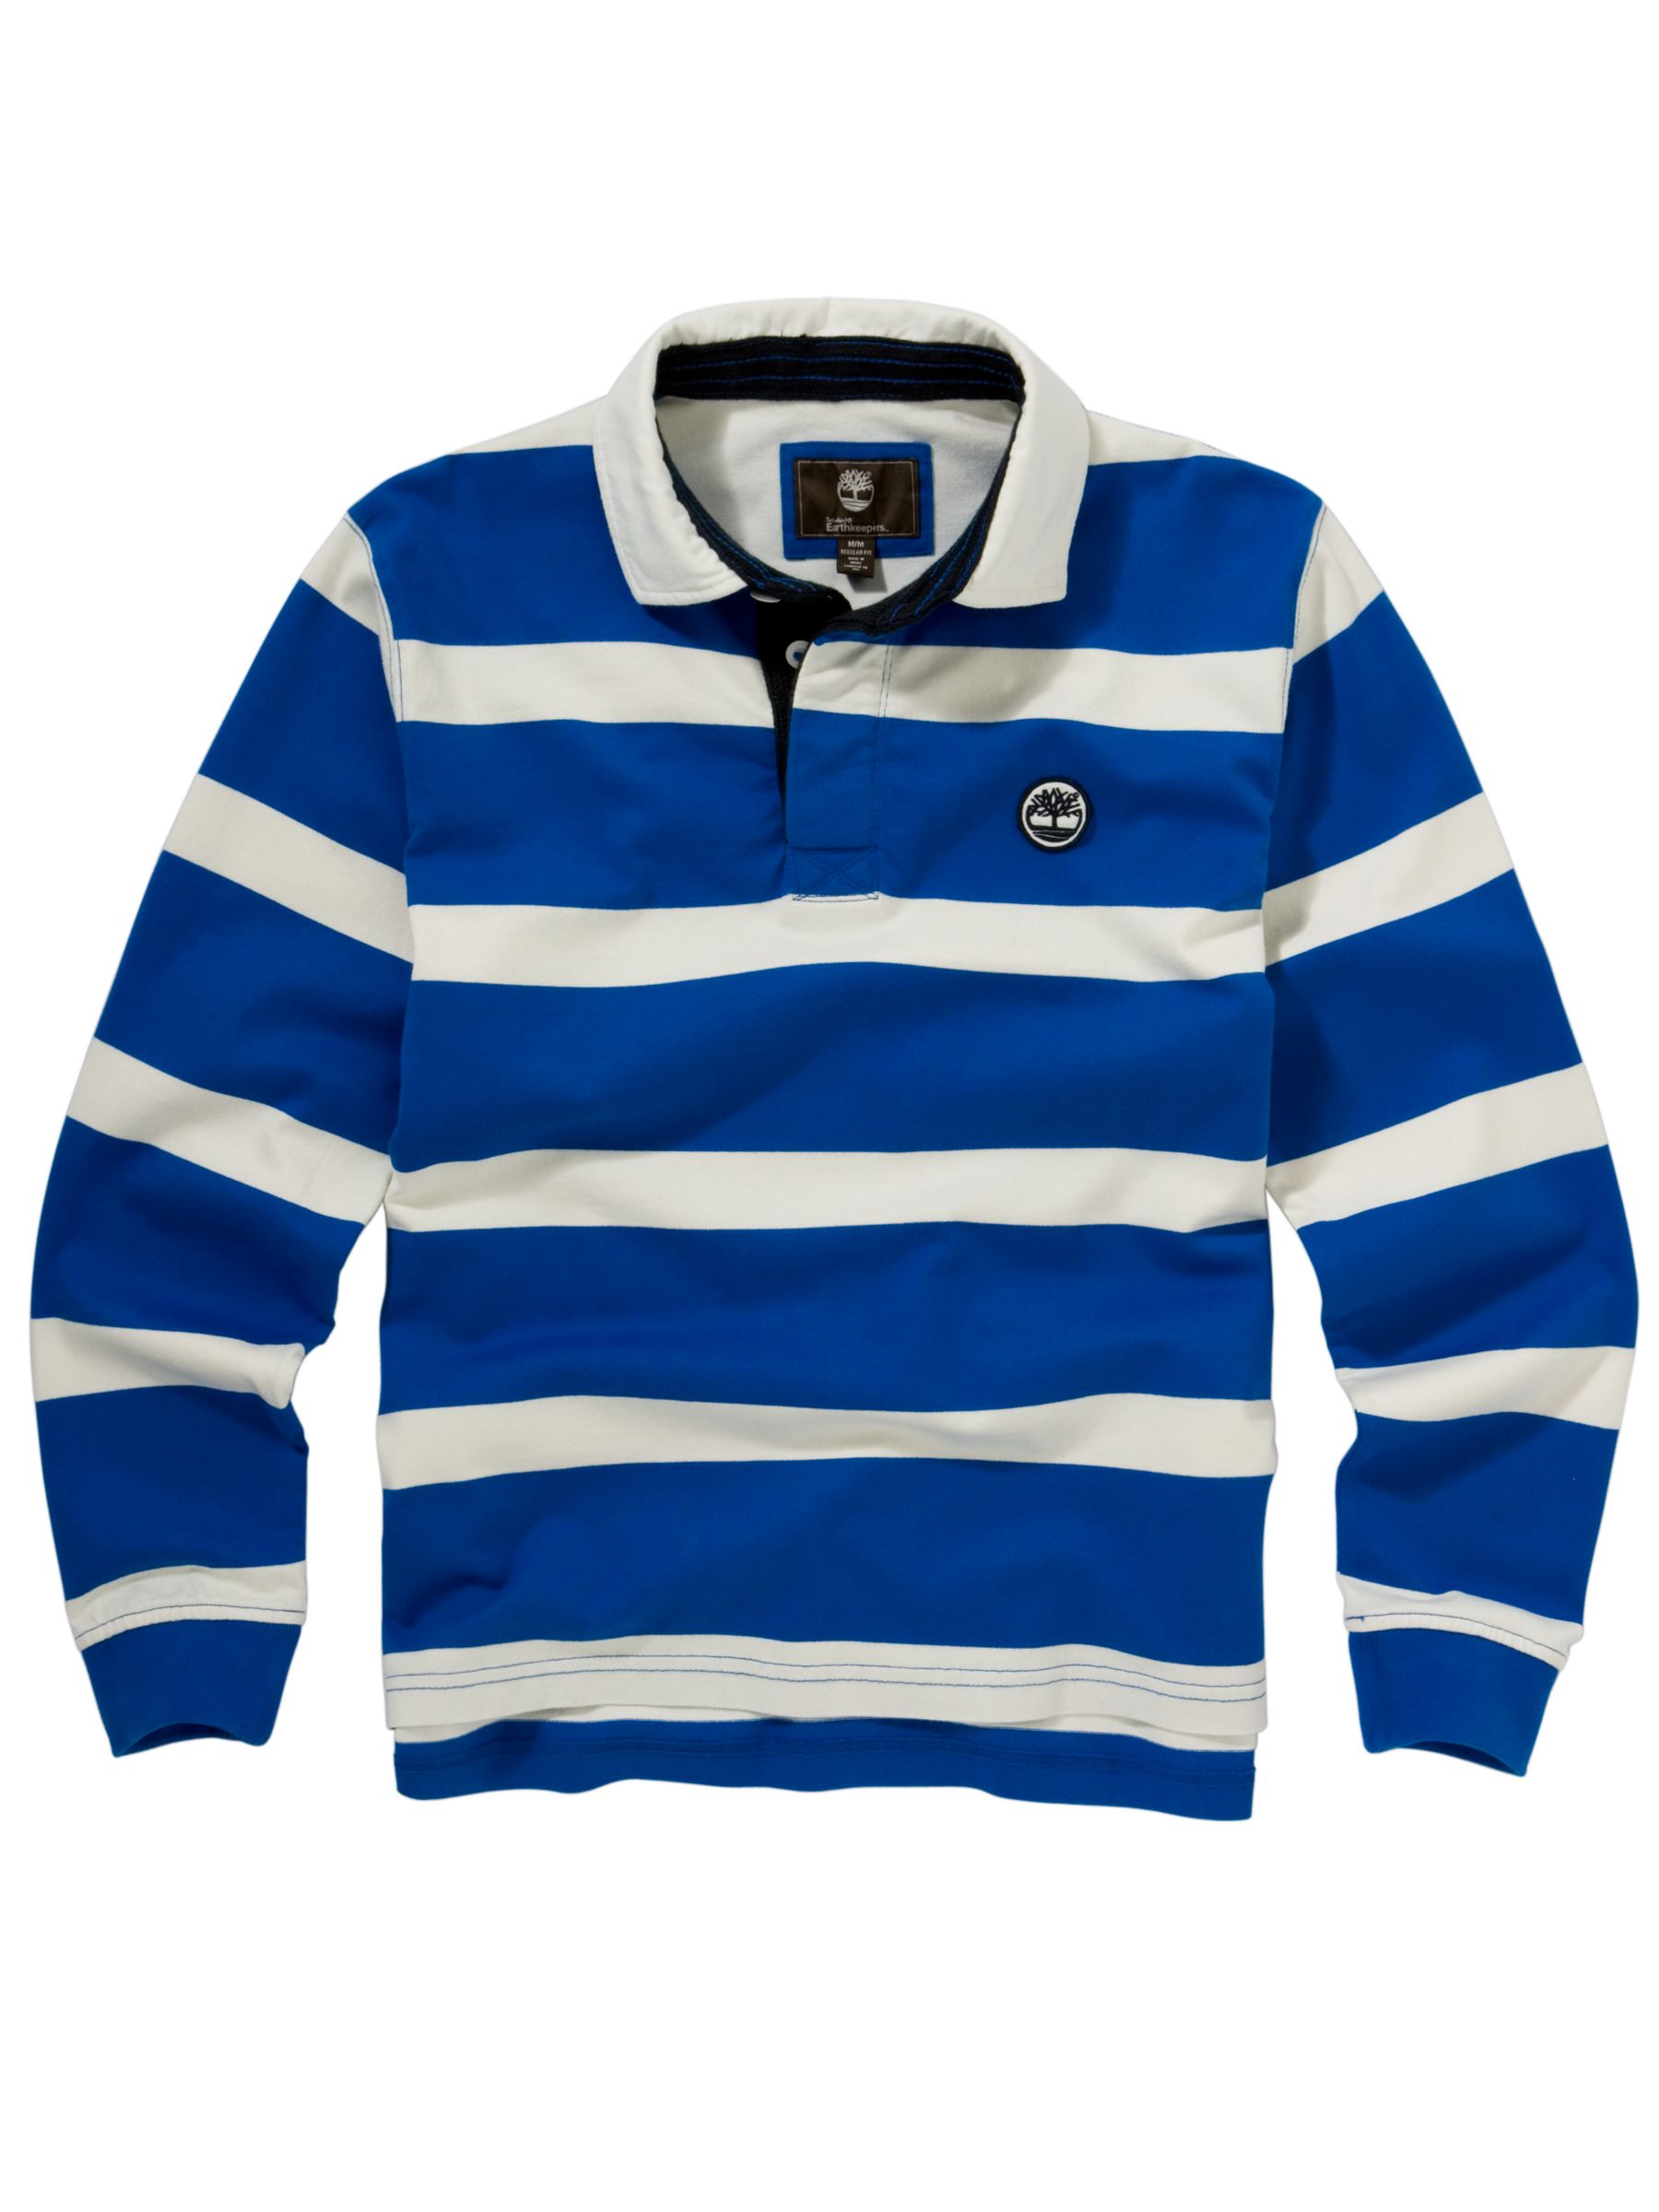 Stripe Rugby Shirt, Prince Blue